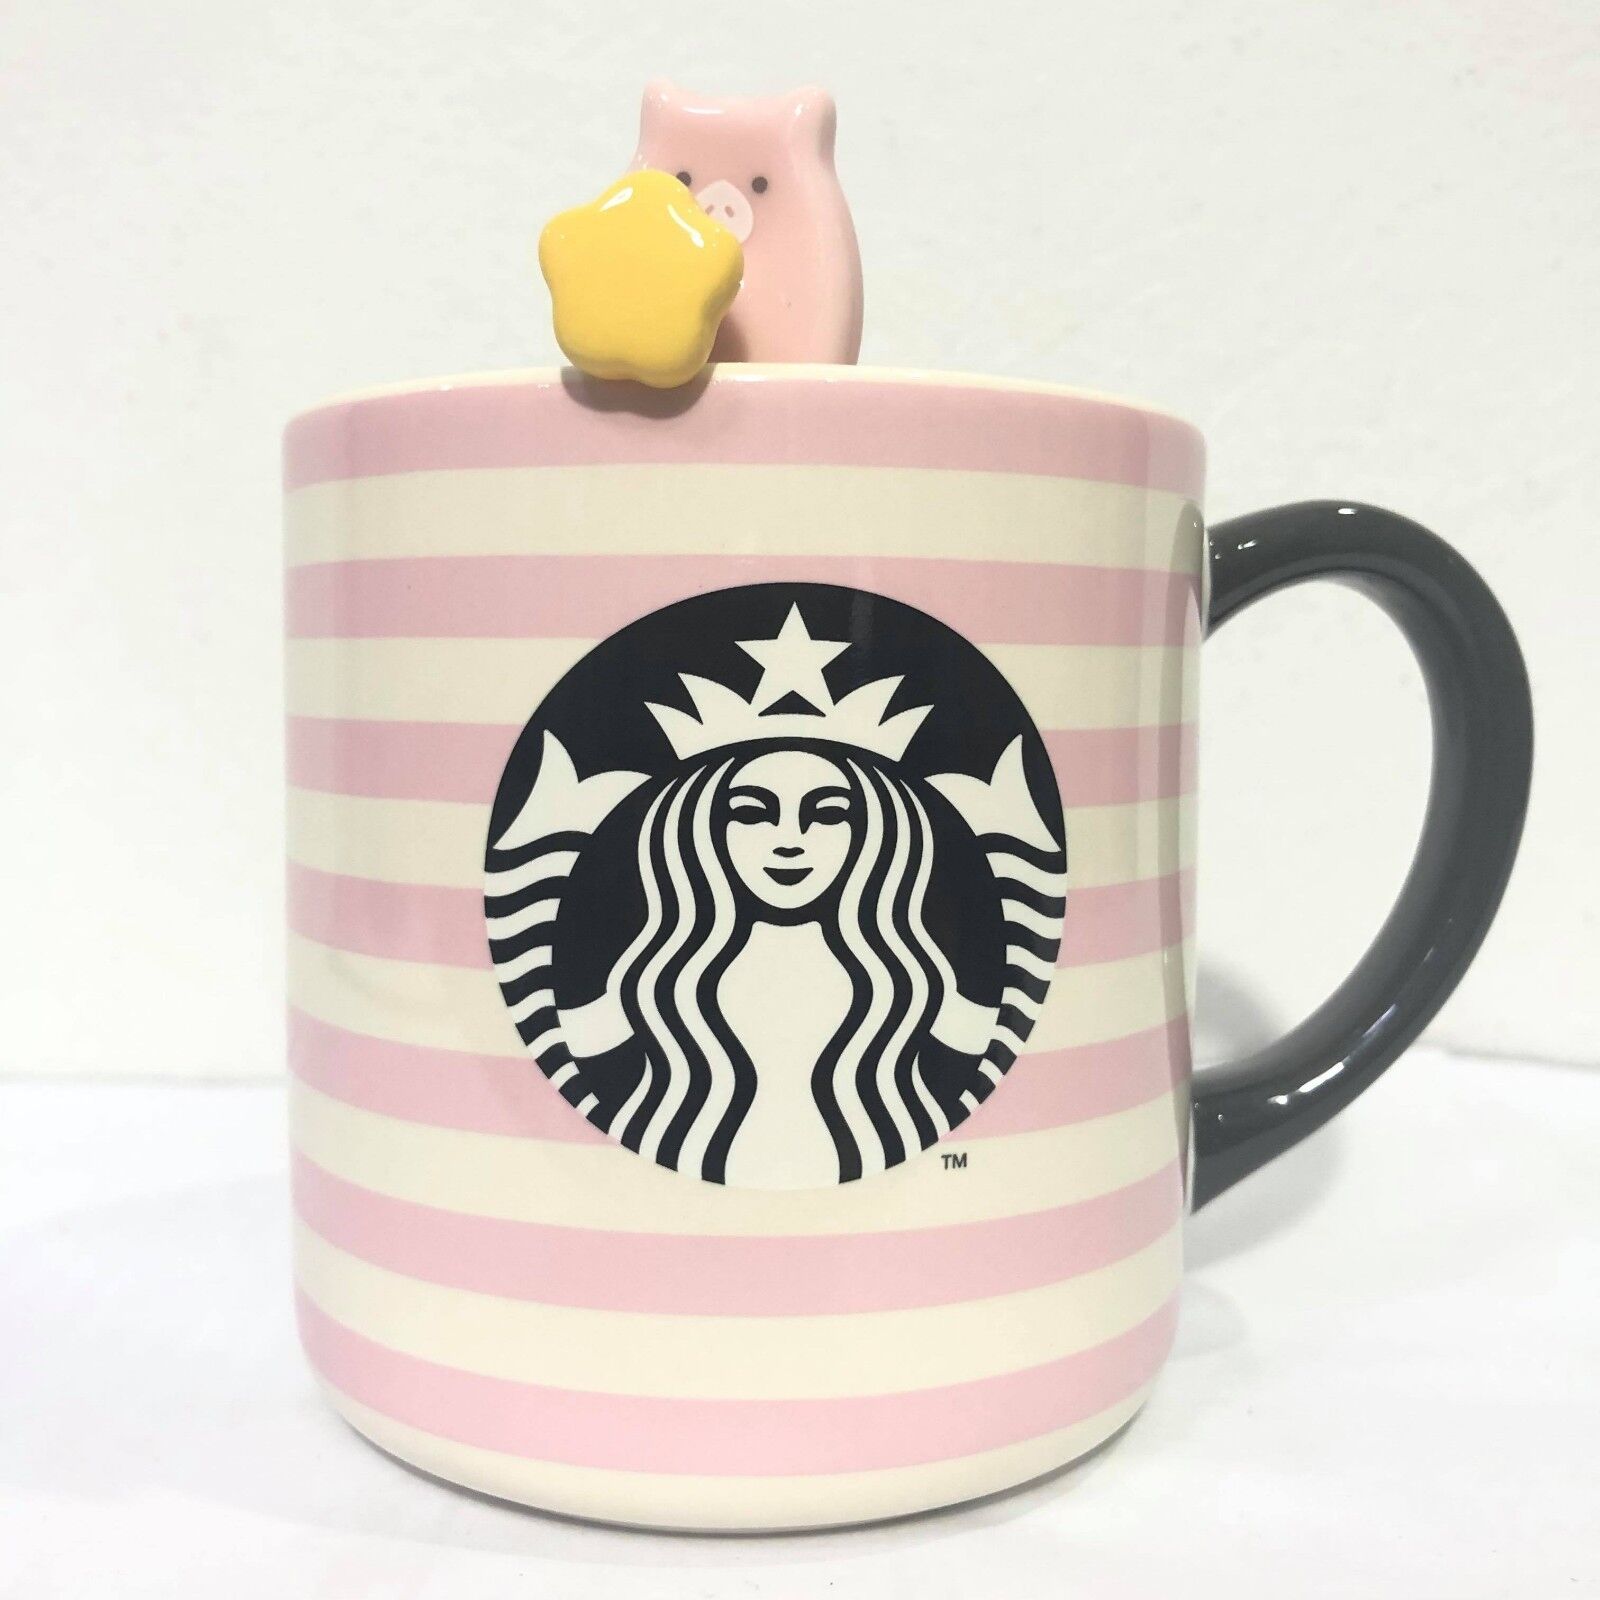 Starbucks Ceramic Mug Siren Pink Stripes Willow Pig Spin Star 12oz.